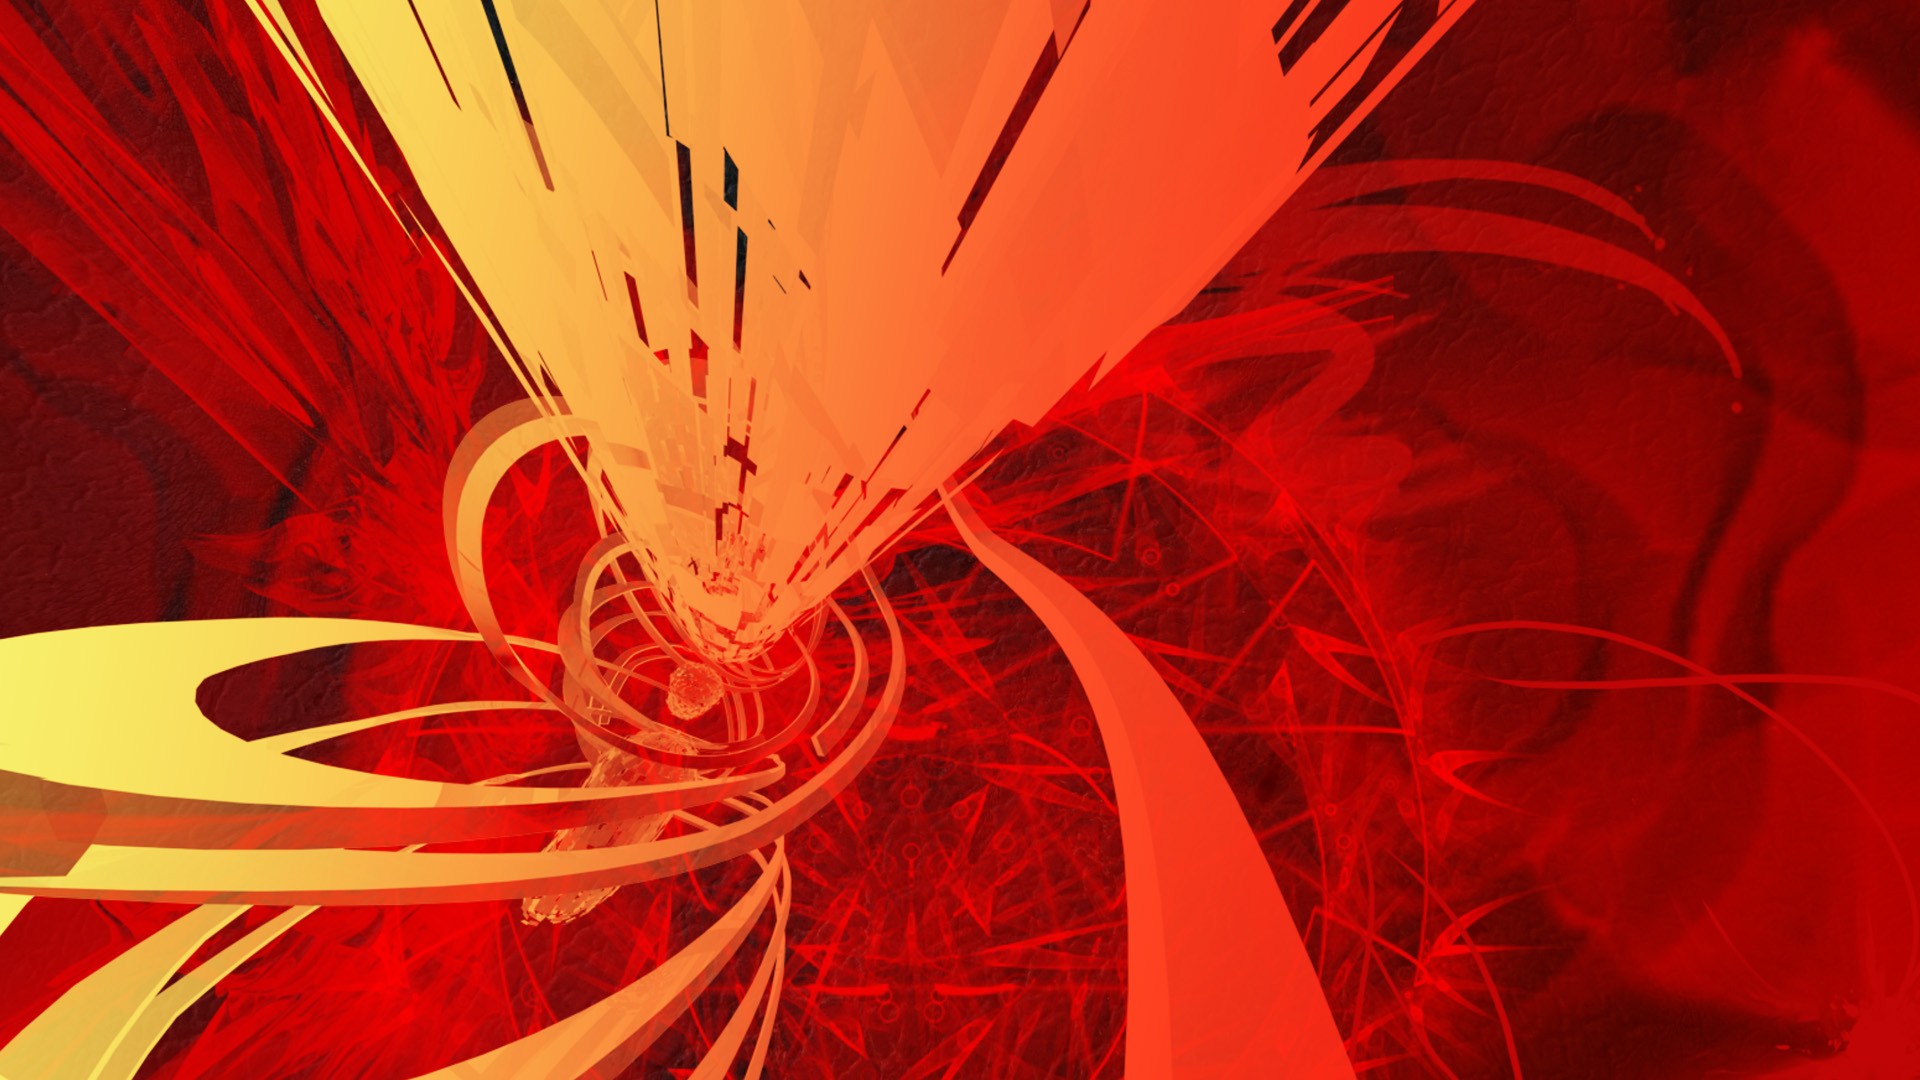 Red wallpaper HD ·① Download free backgrounds for desktop ...